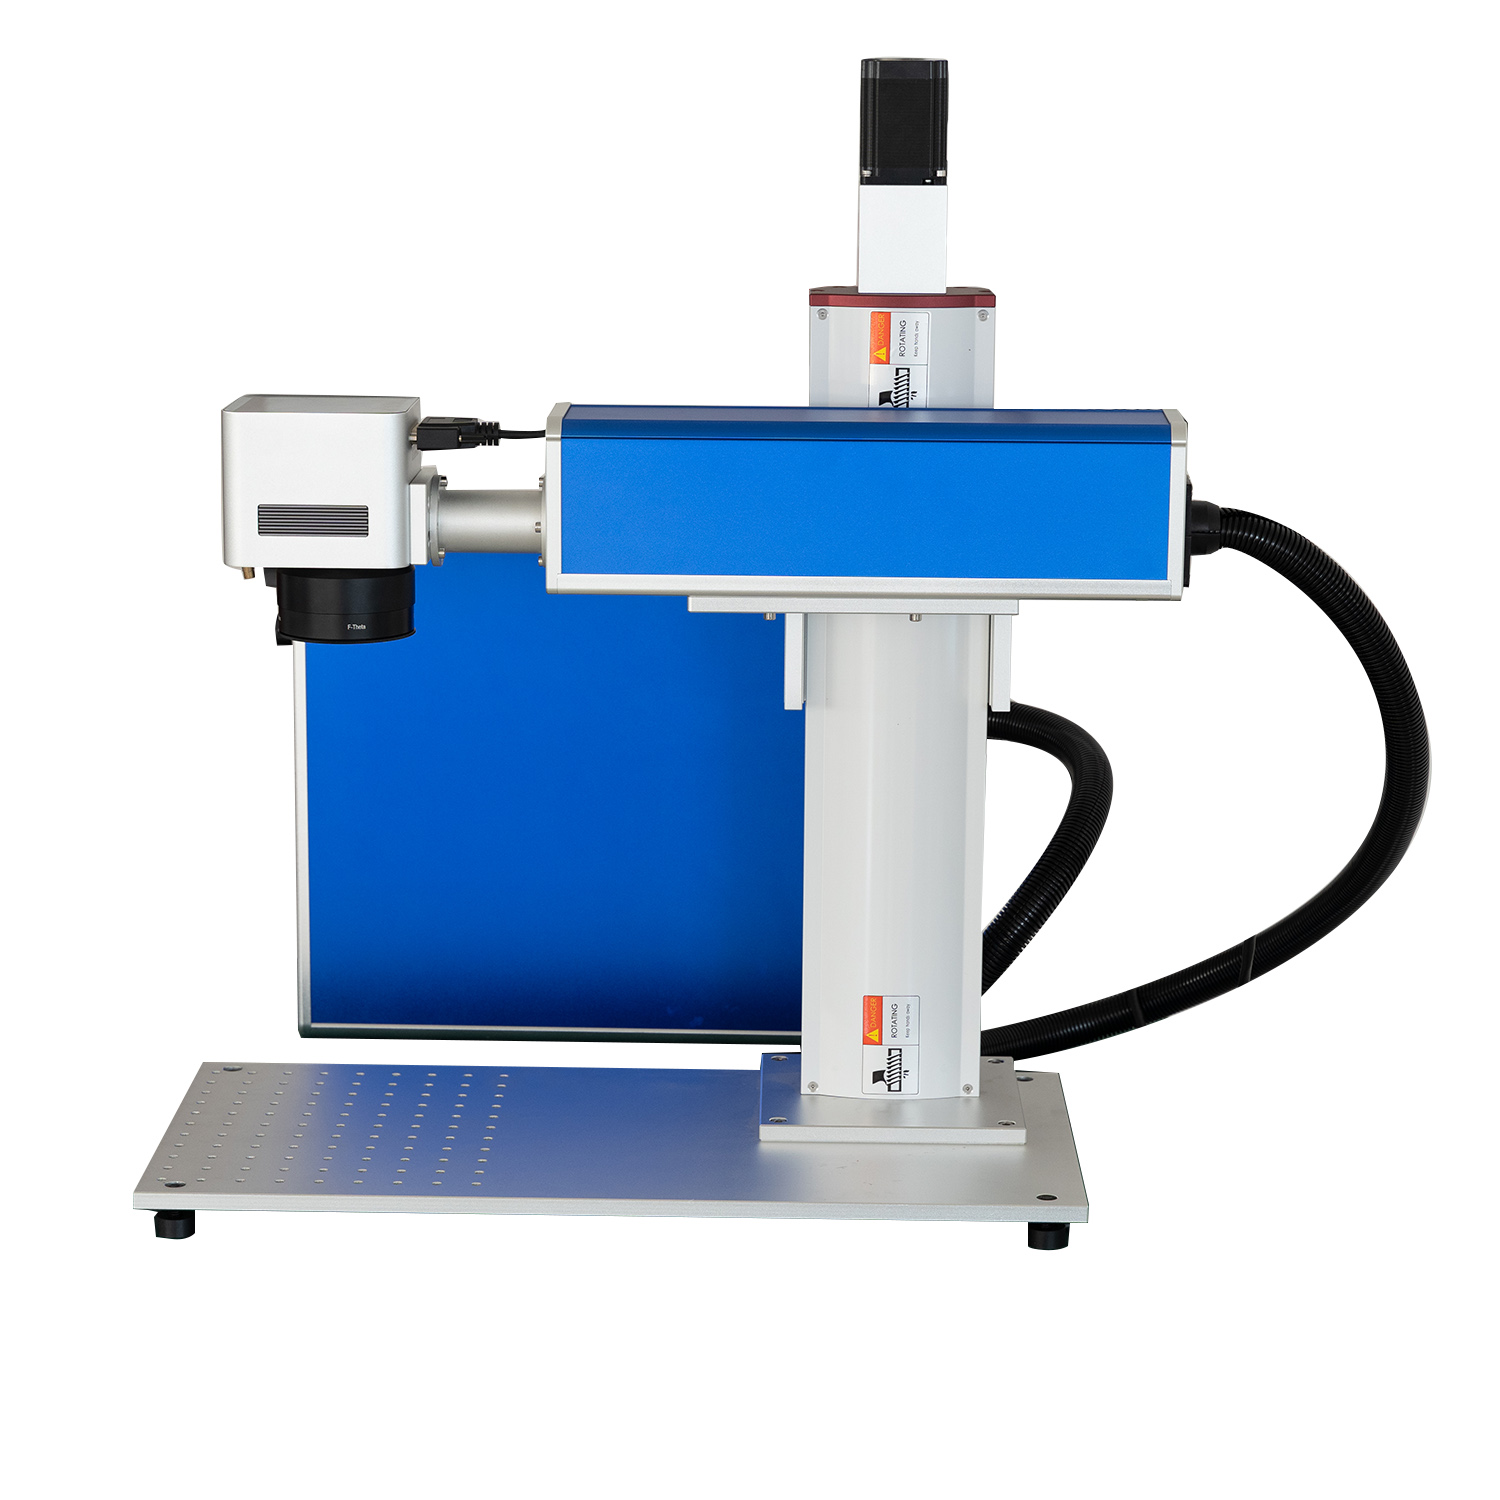 Ray fine JPT MOPA M8 20W 100W Fiber Laser Marking Machine for Glass Drilling Cutting Engraving metal marking